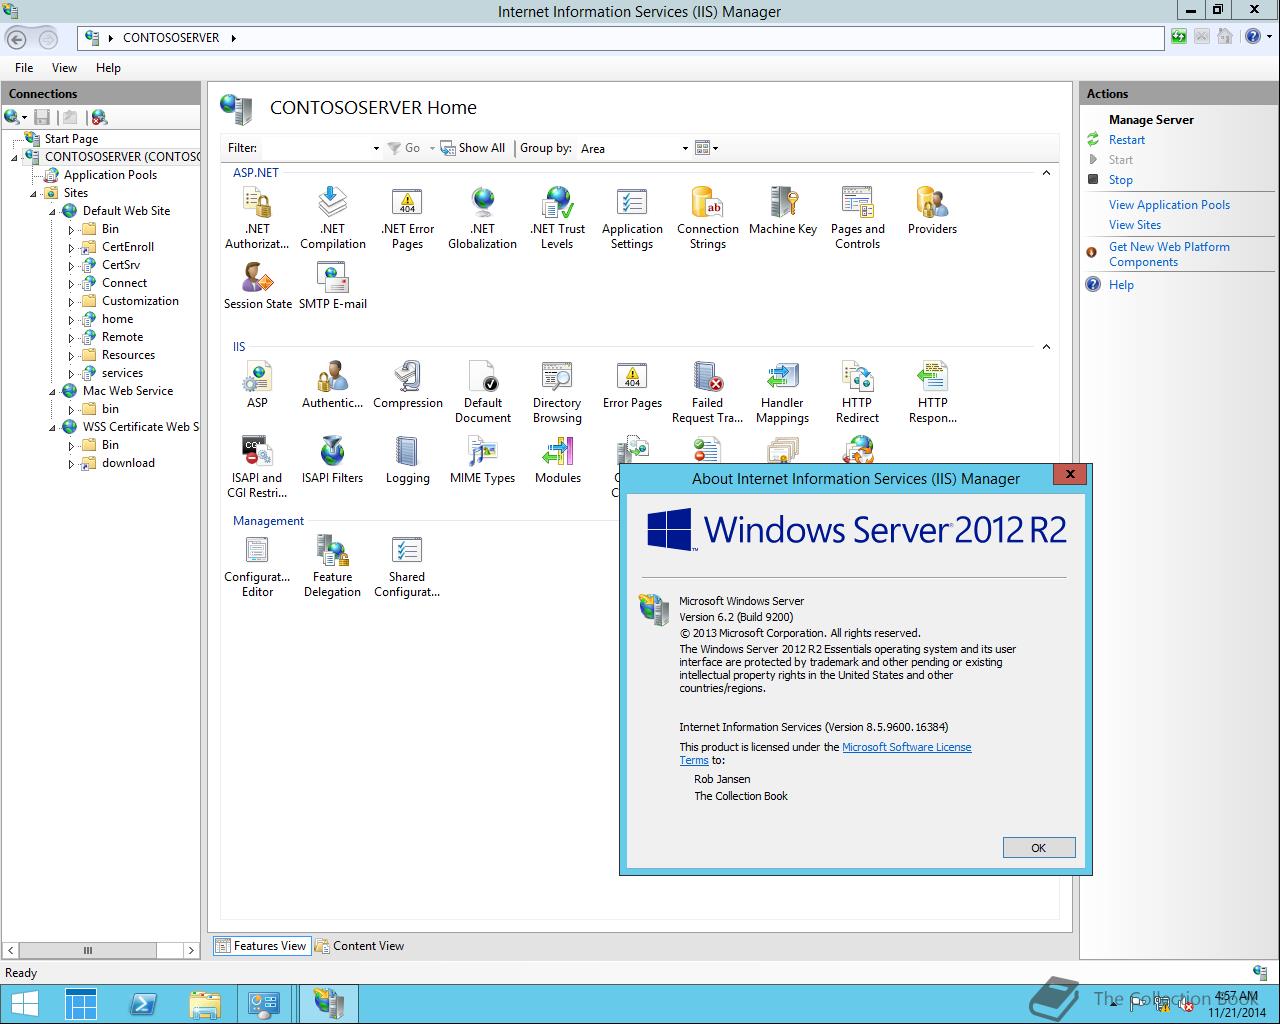 Microsoft Windows Server 2012 R2 Essentials 63960017415 The Collection Book 1378